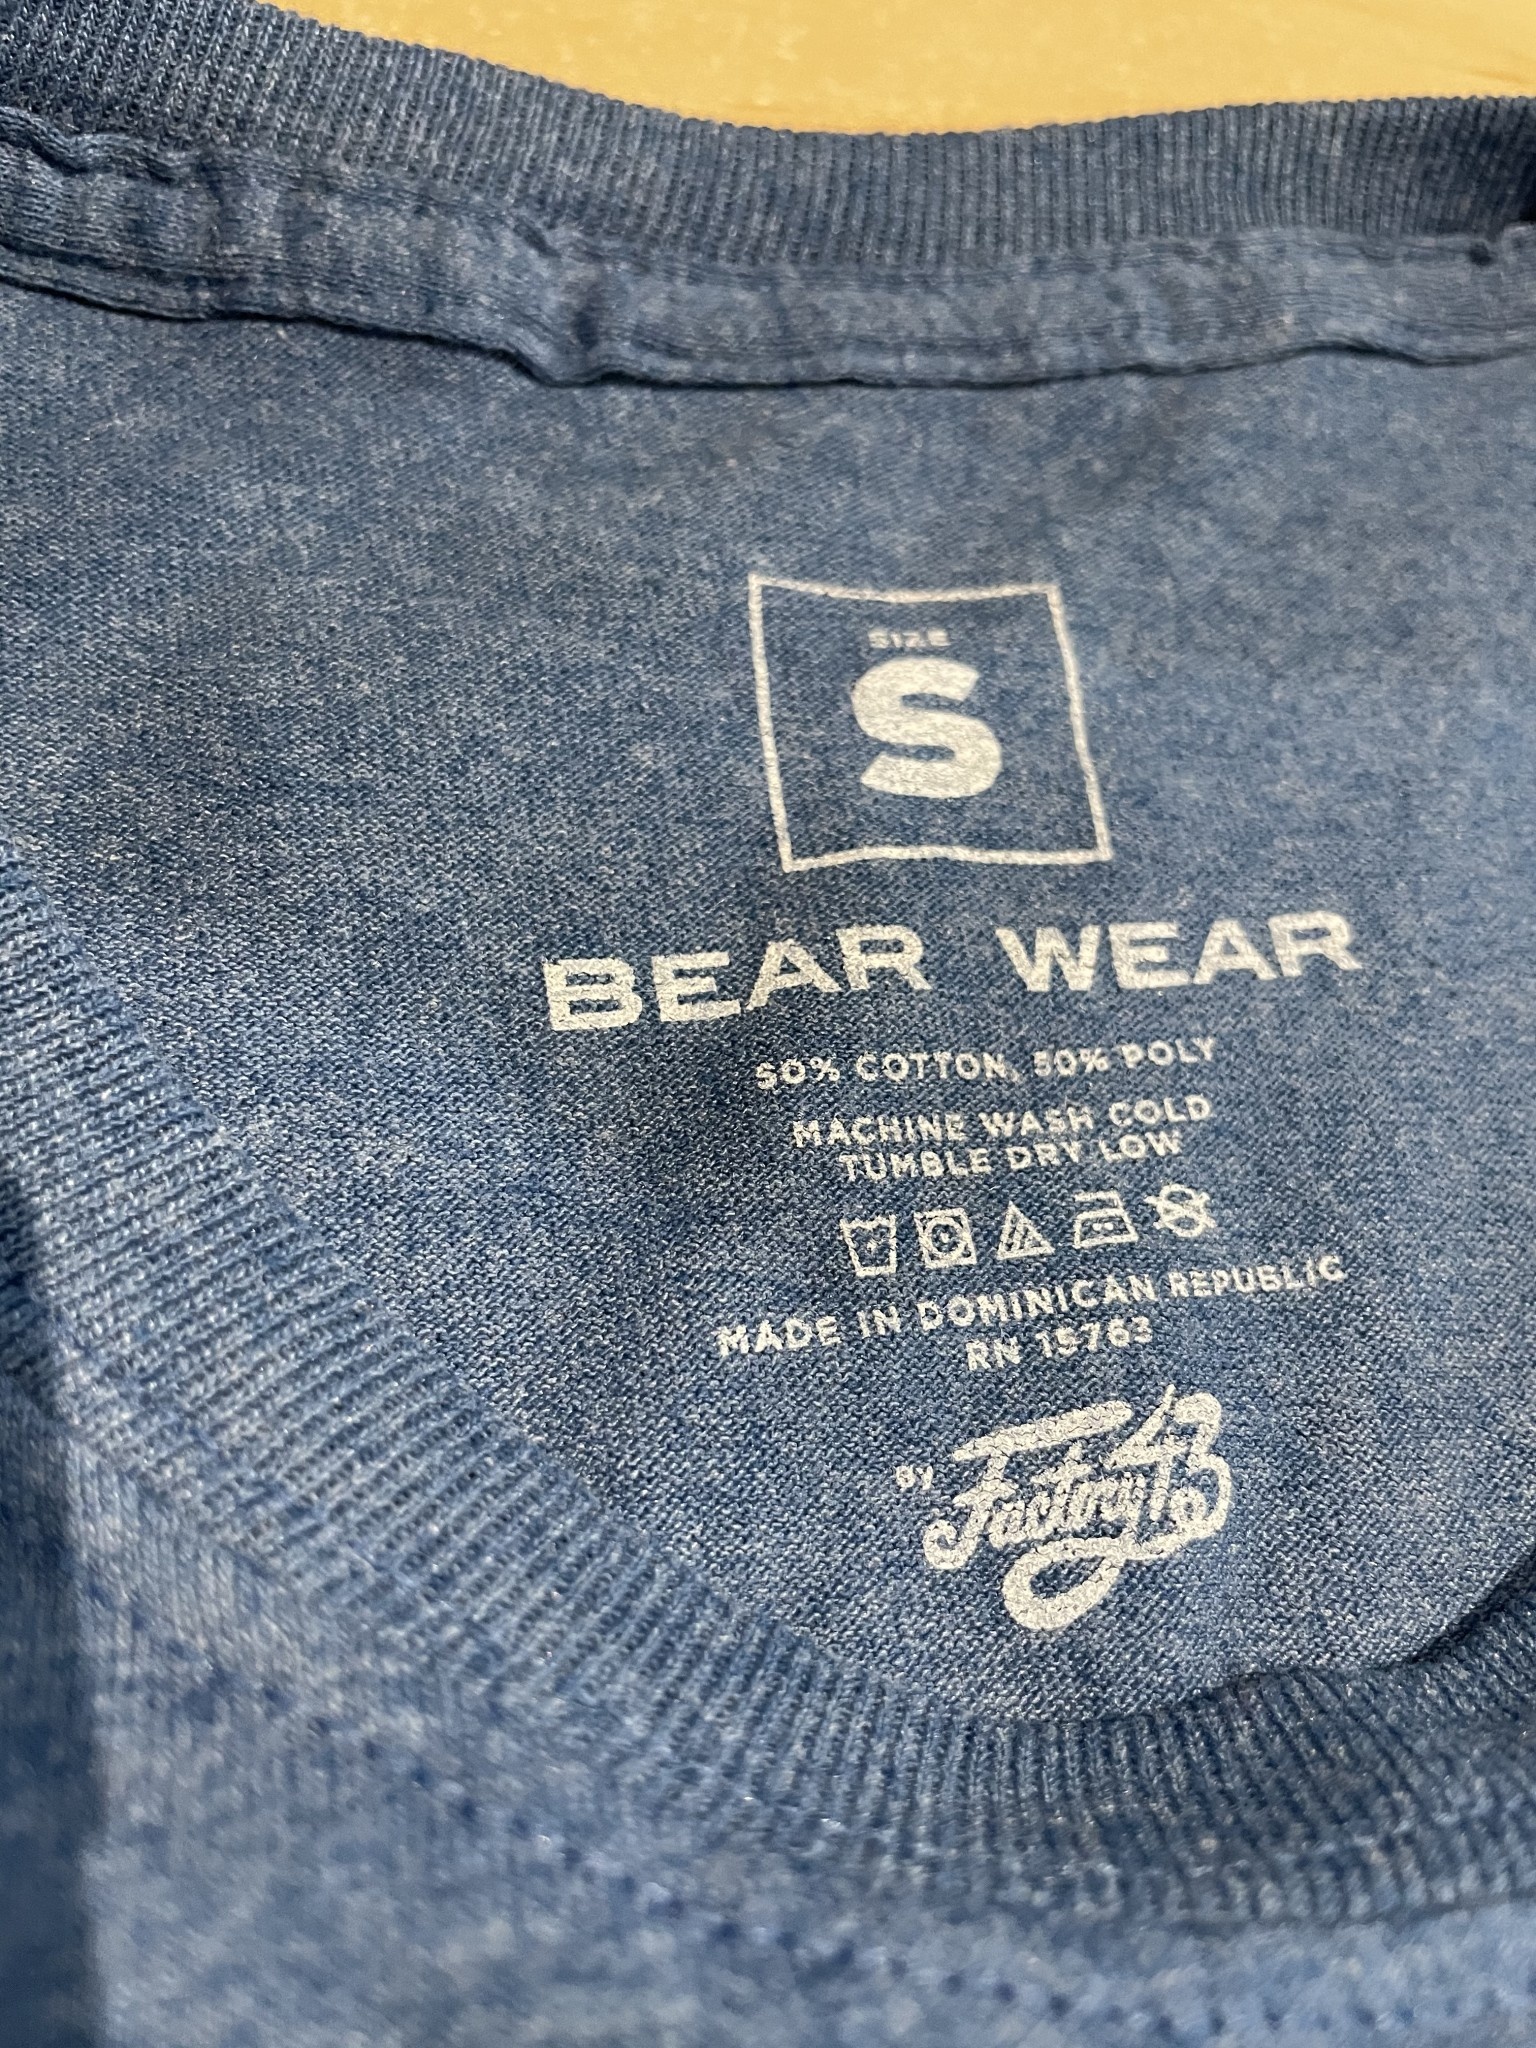 Bear Wear - Palm Springs Shirt - Bear Wear